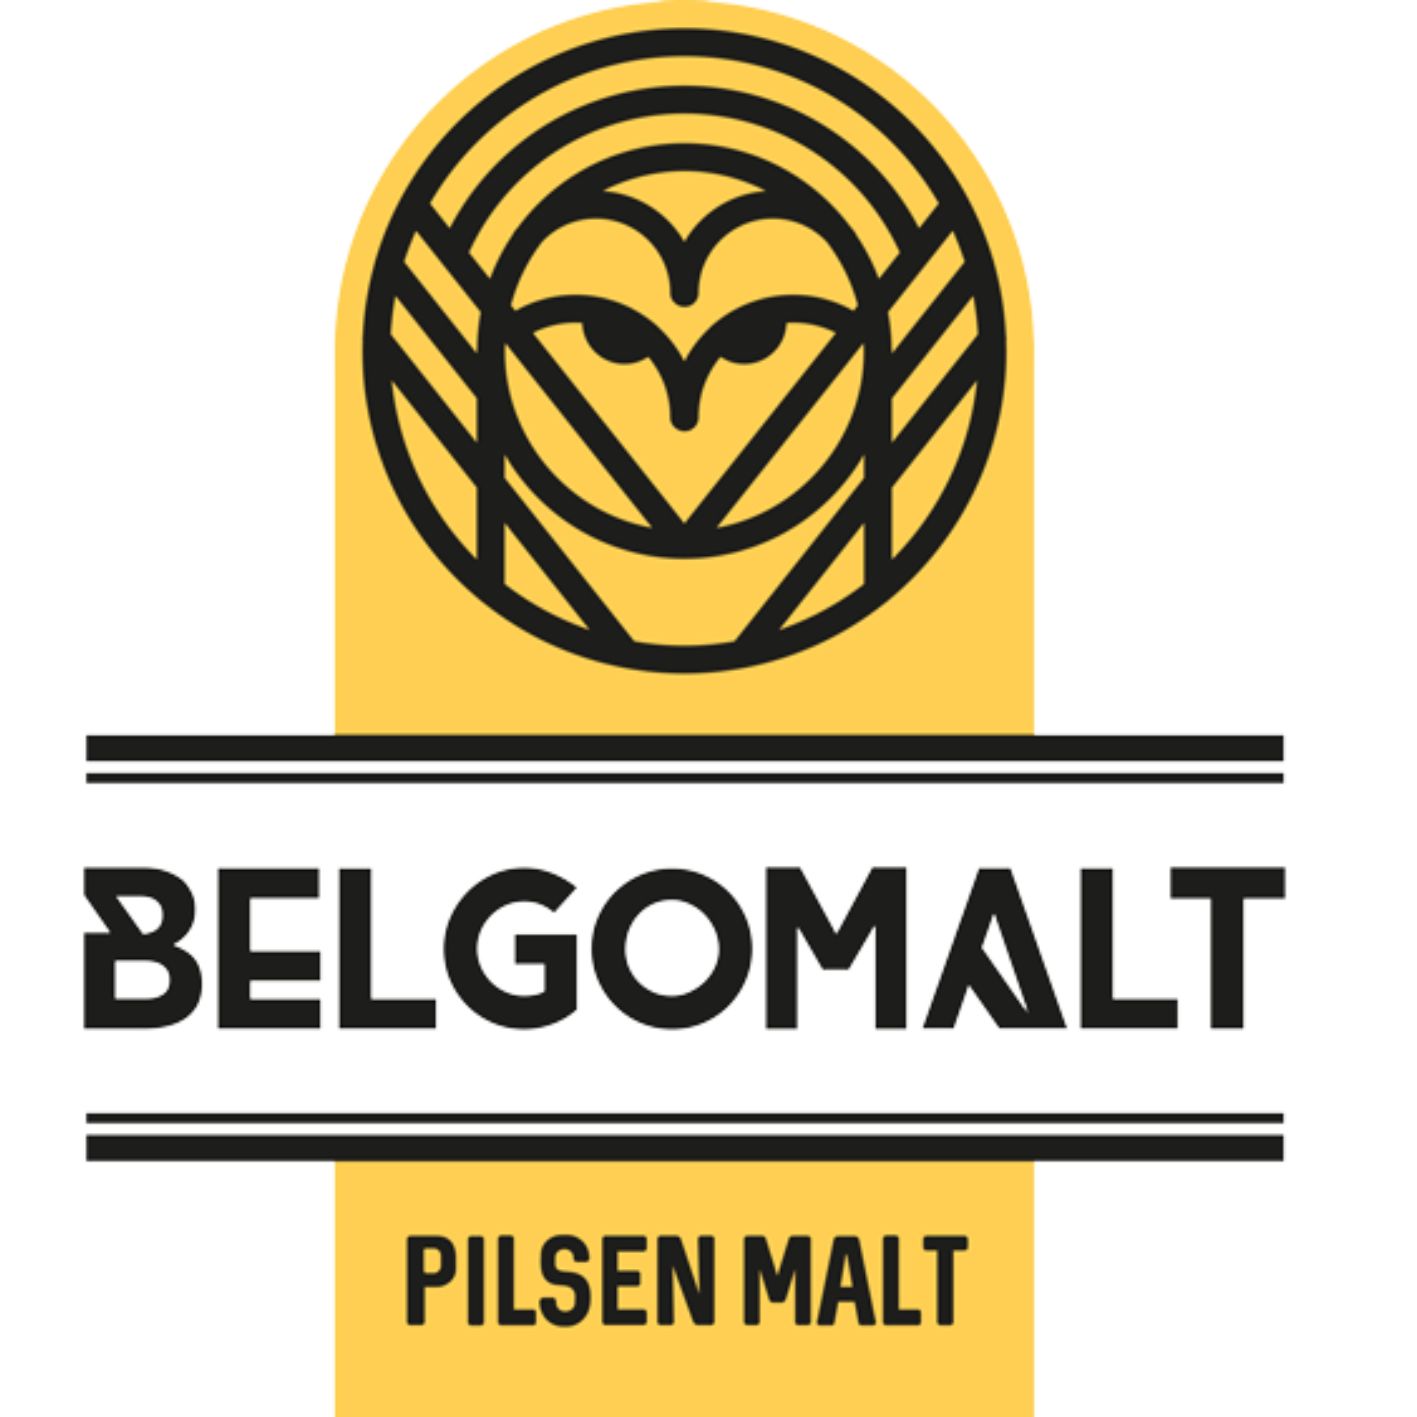 Belgomalt Pilsen malt 2,5-4,5 EBC